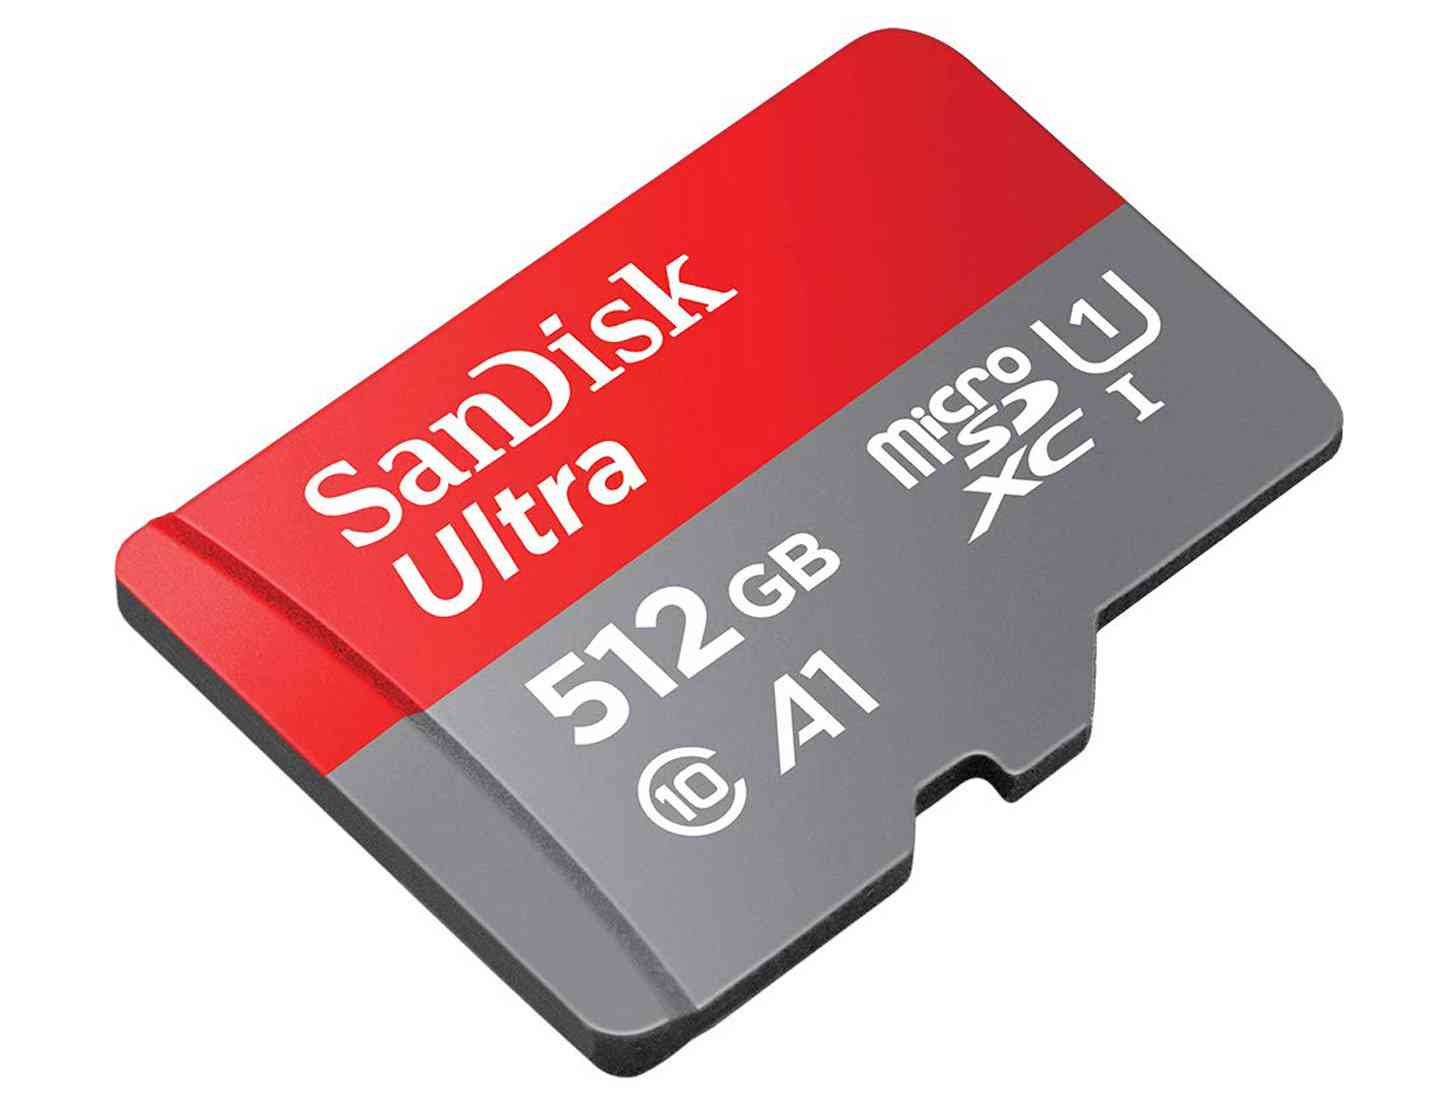 SanDisk 512GB microSD card